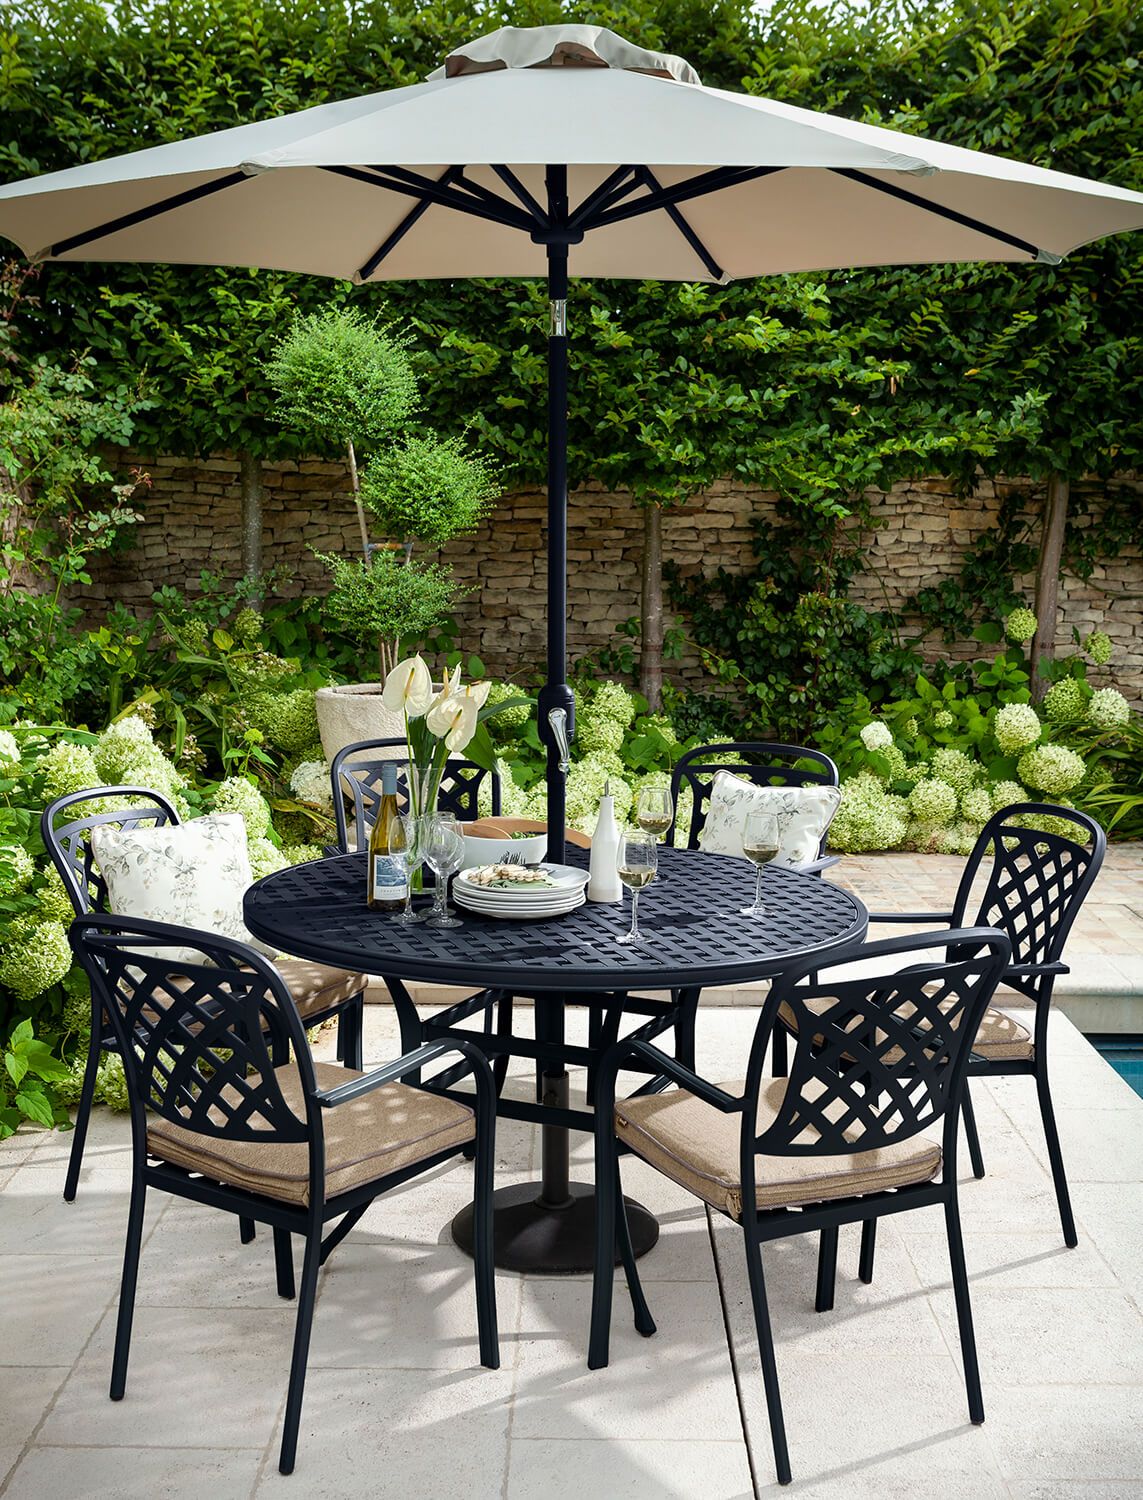 Transform Your Outdoor Space with Hartman
Garden Furniture